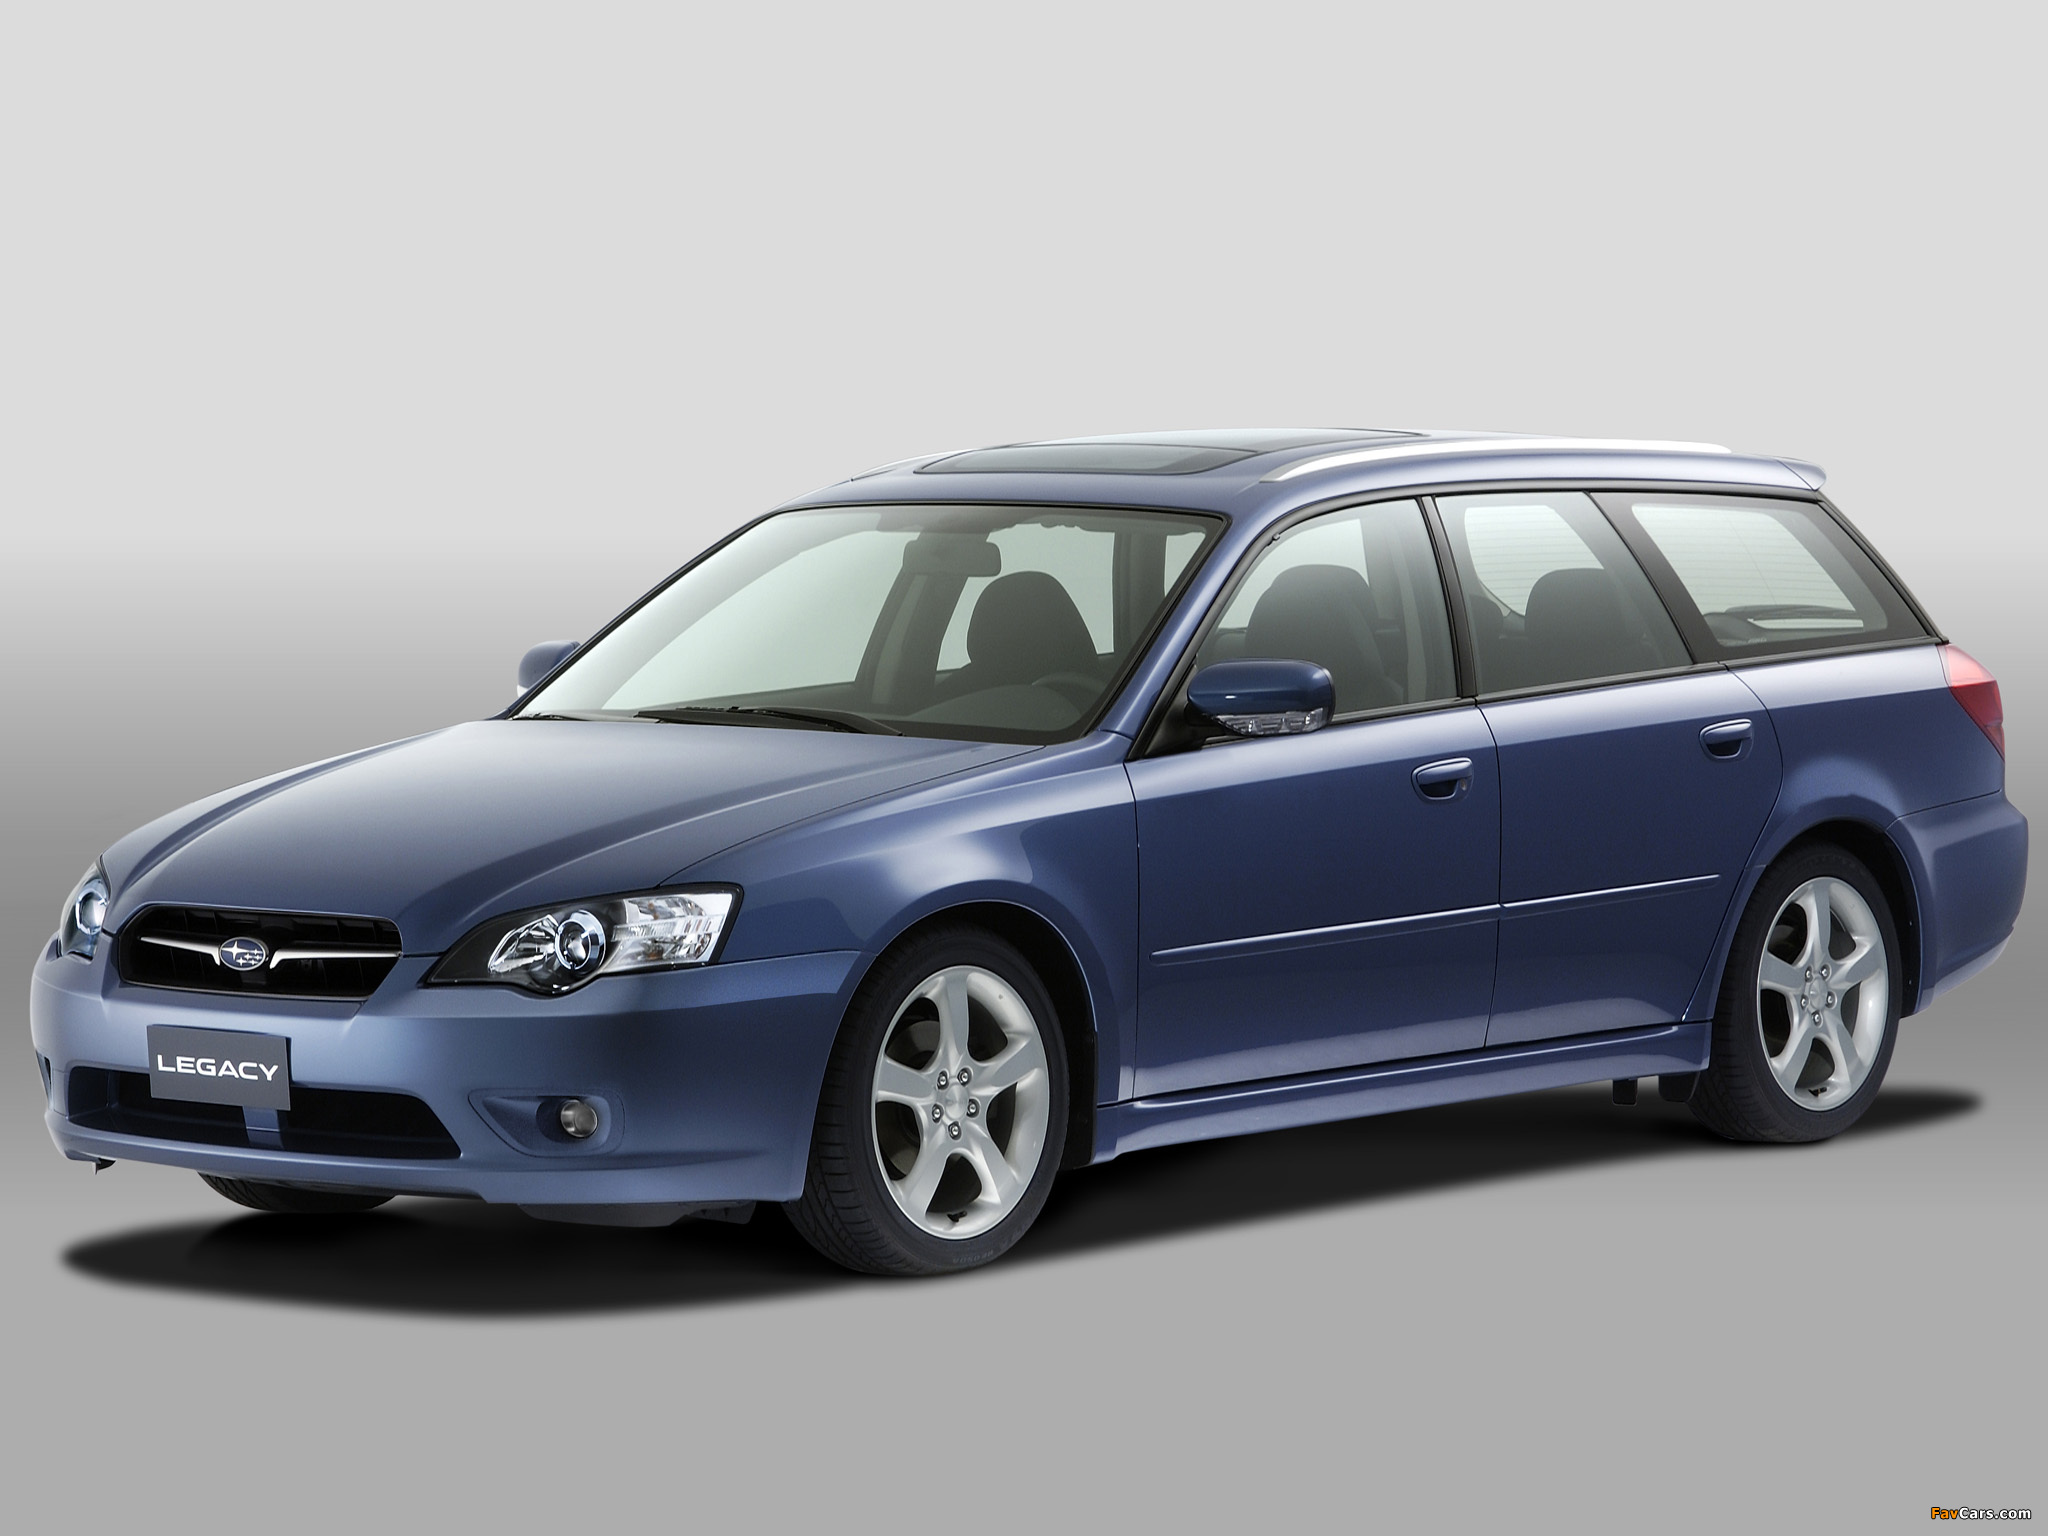 Кузов универсал 5. Subaru Legacy 2004 универсал. Subaru Legacy 4 Wagon. Субару Легаси 2003 универсал. Субару Легаси 2 универсал.